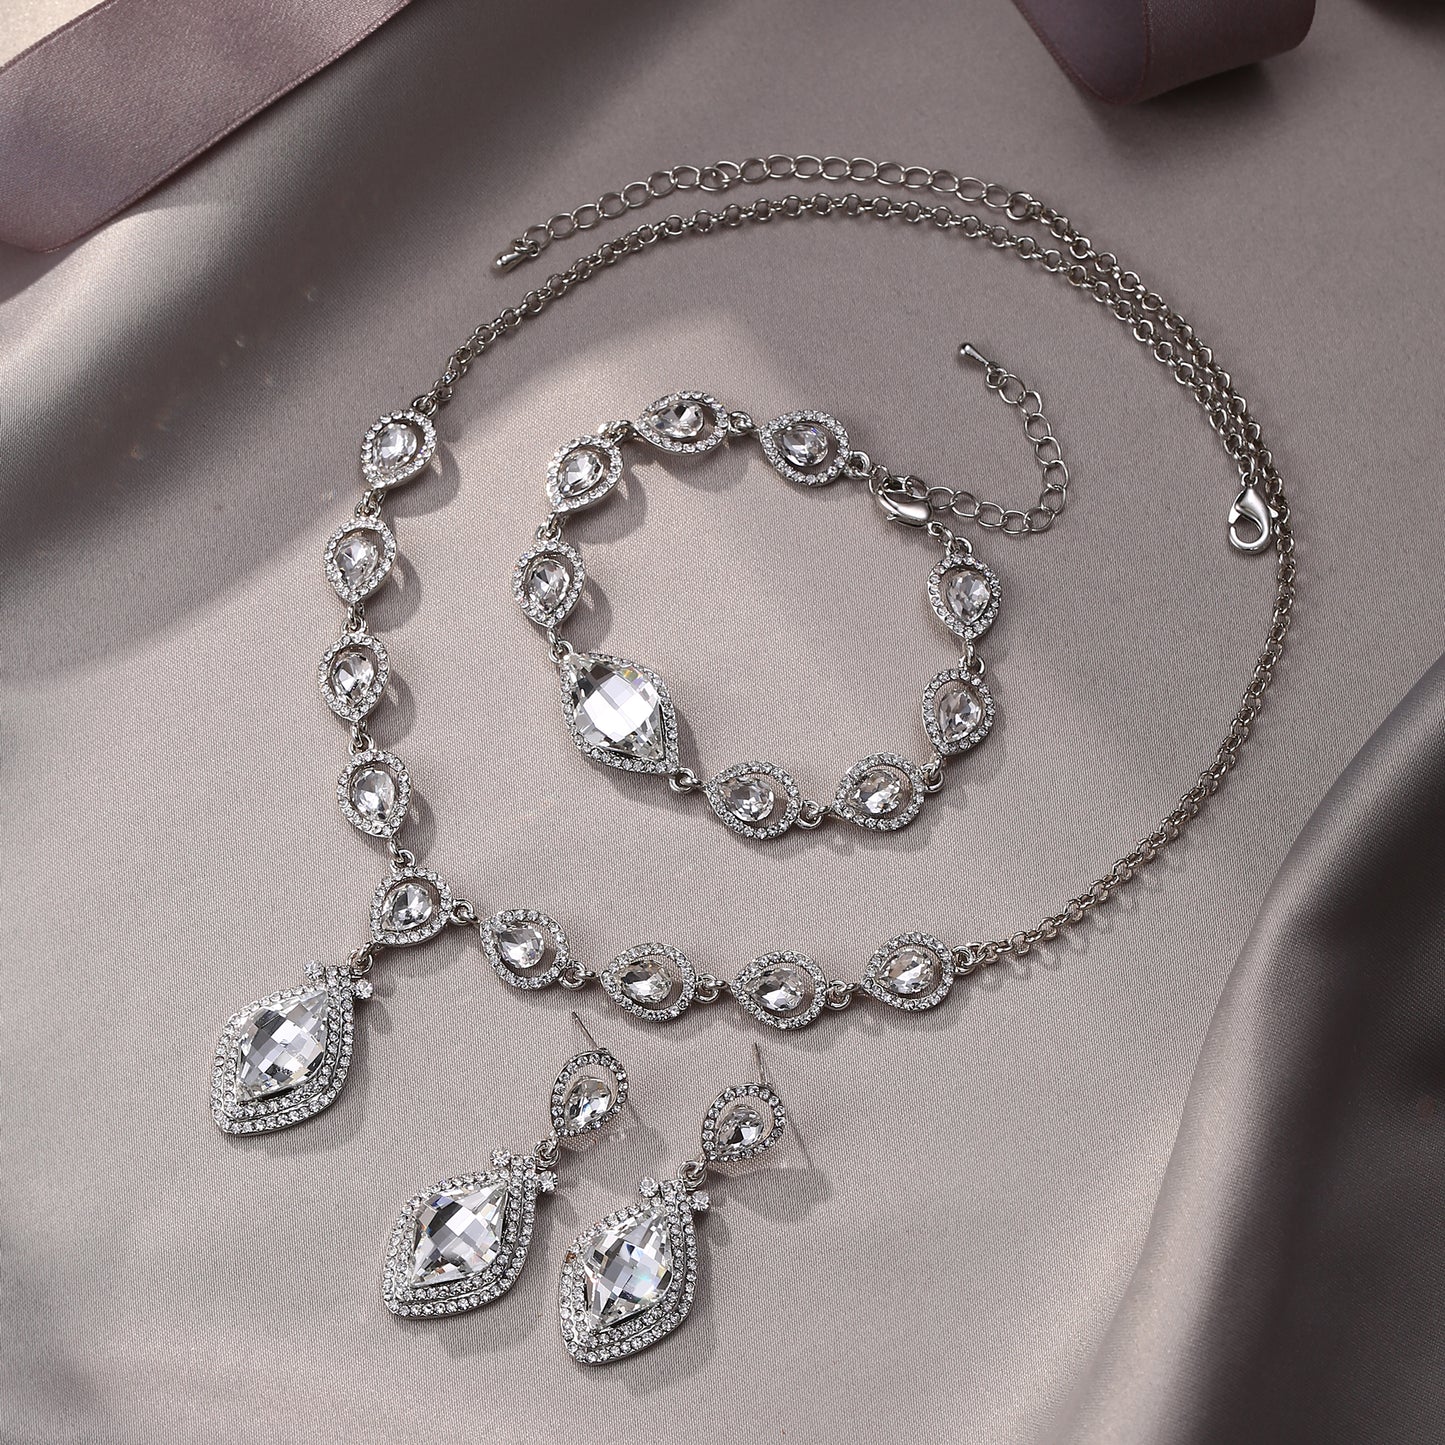 13067 EVER FAITH Bridal Wedding Crystal Marquise Teardrop Pendant Necklace Earrings Bracelet Set